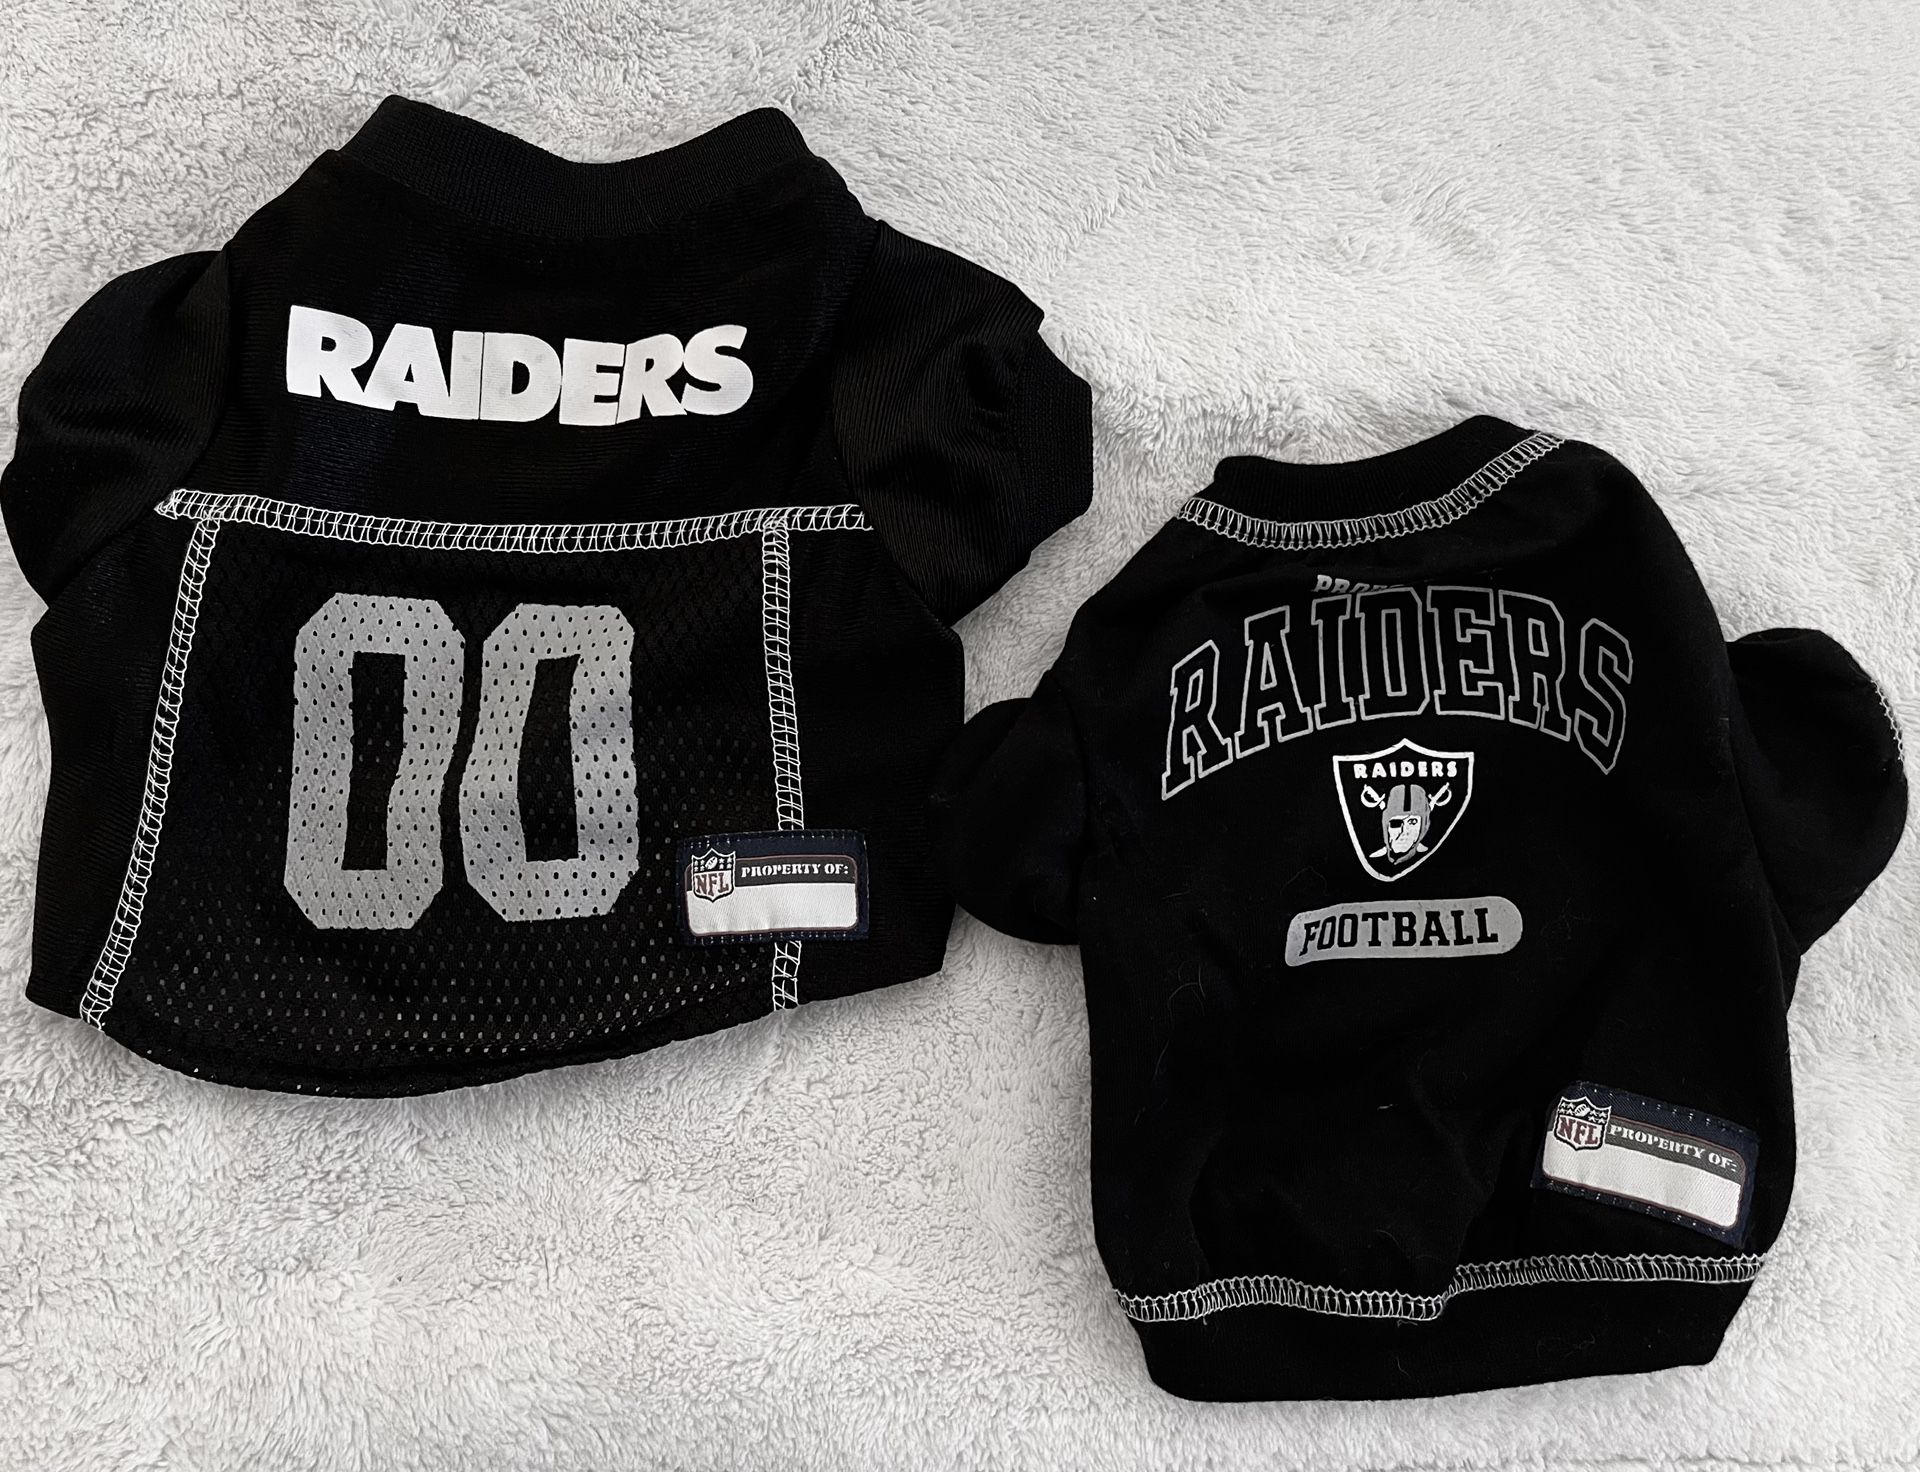 Raiders Jersey & Shirt (pet)